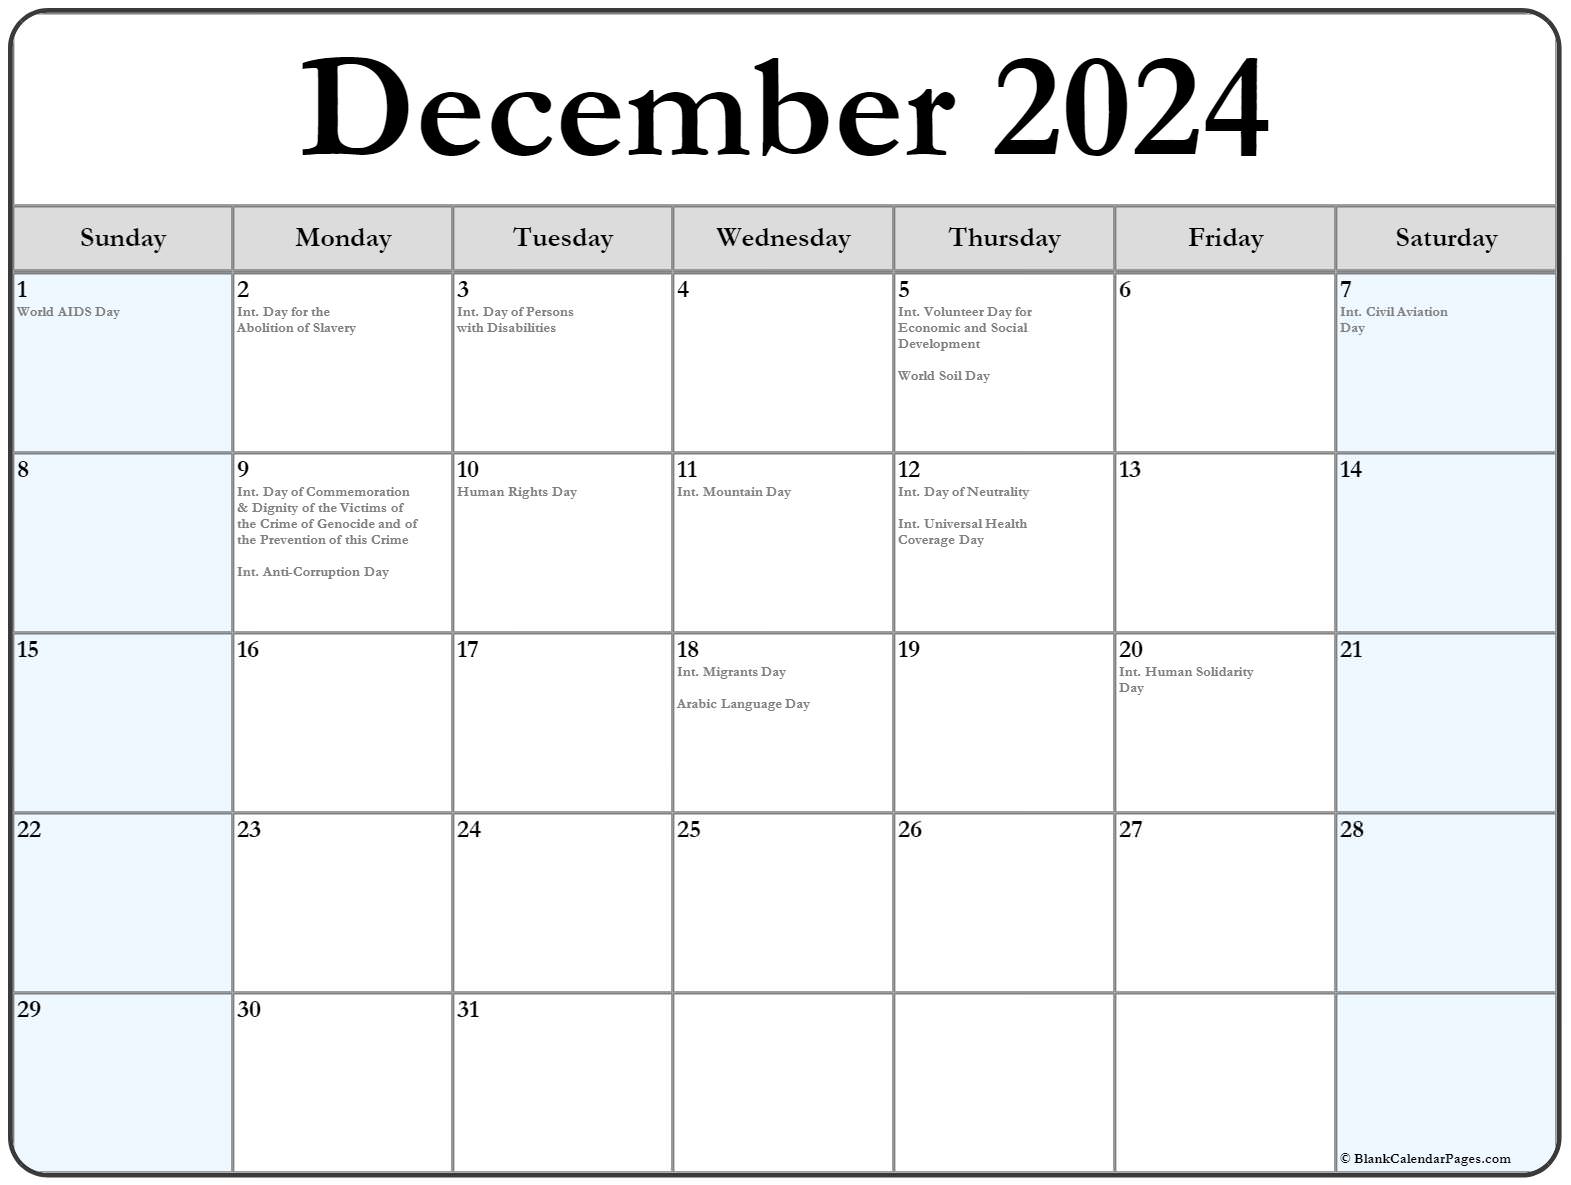 Dec 2024 Calendar Holidays Sibel Maudie